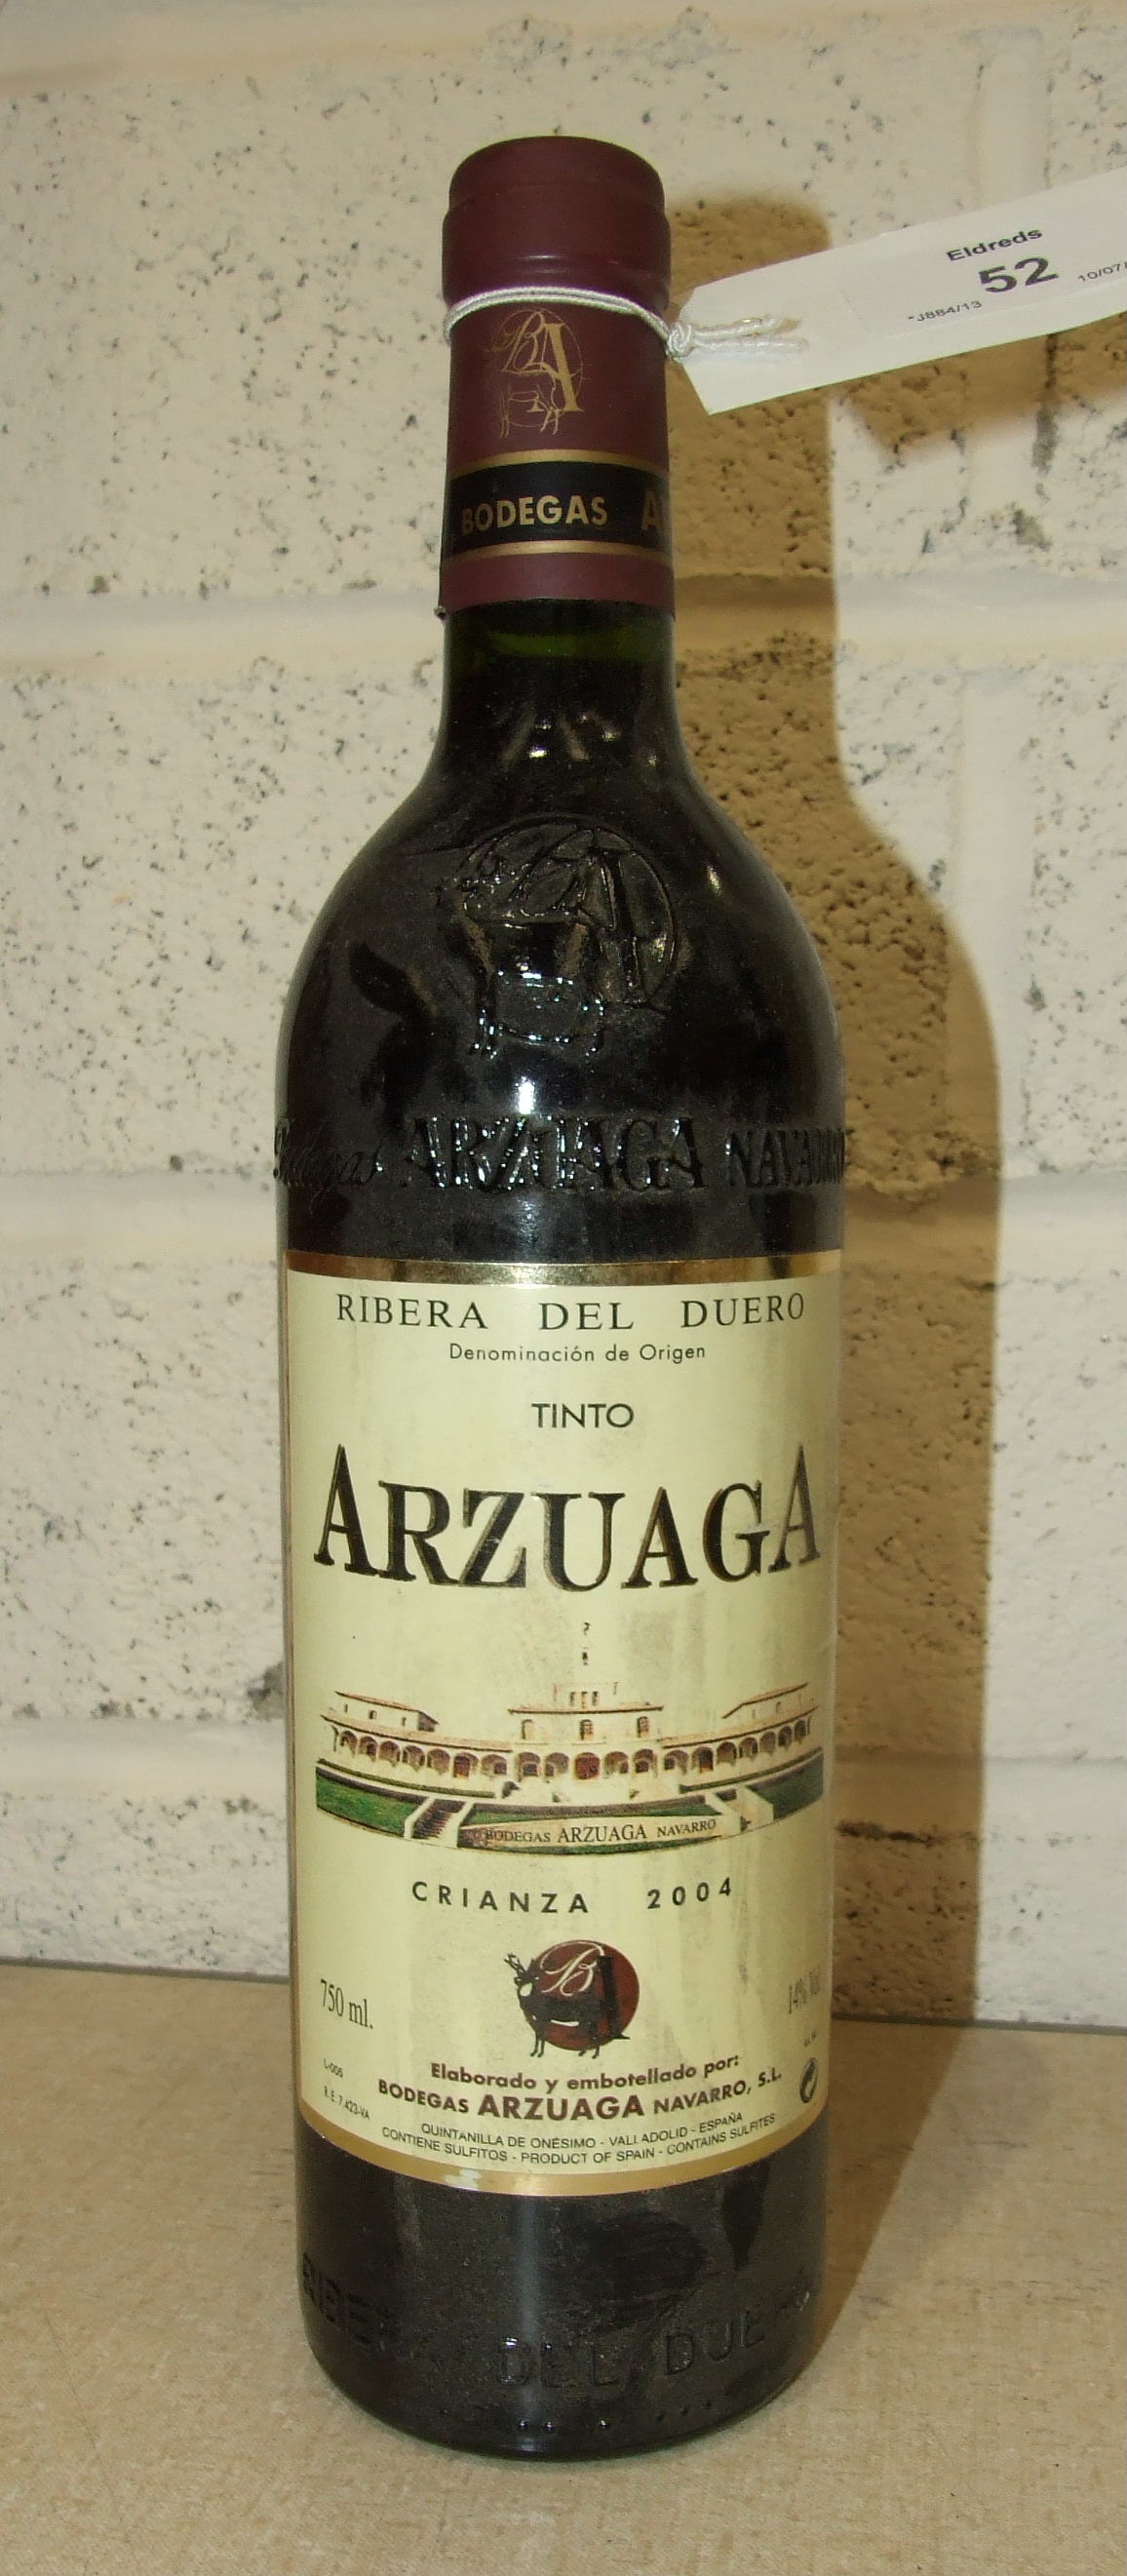 Garrafeira Fonseca 1992, 1 bottle, Castell del Remei 1999, 1 bottle and Arzuaga Rioja 2004, 1